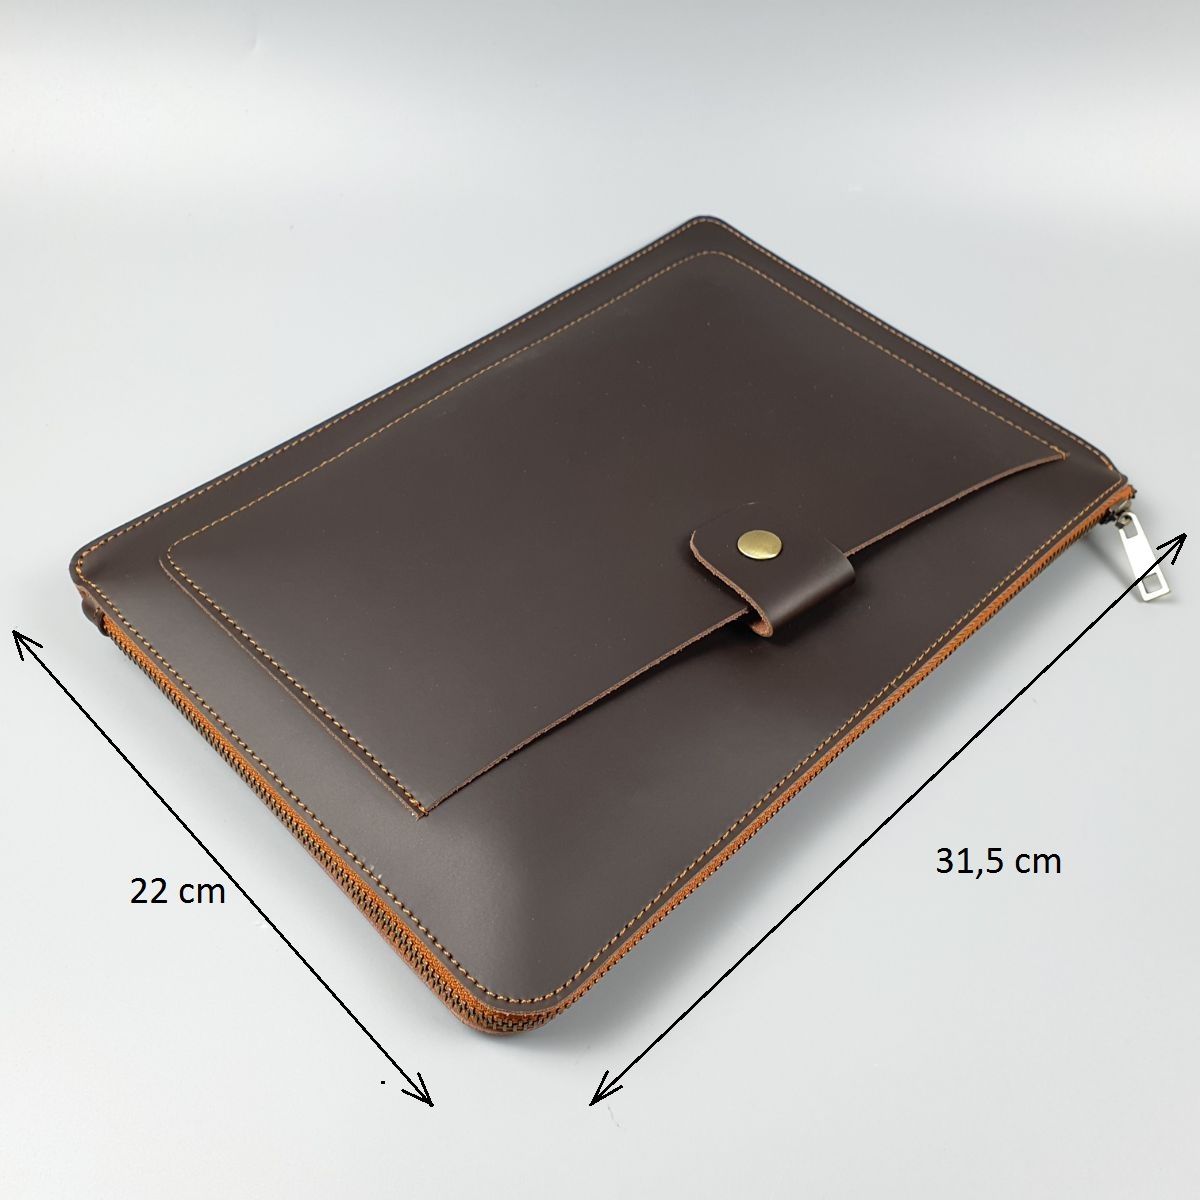 [Da thật] Clutch cầm tay nam, túi đựng macbook, ipad 12 inch da bò sáp CL139 (nâu) - 100% da bò thật